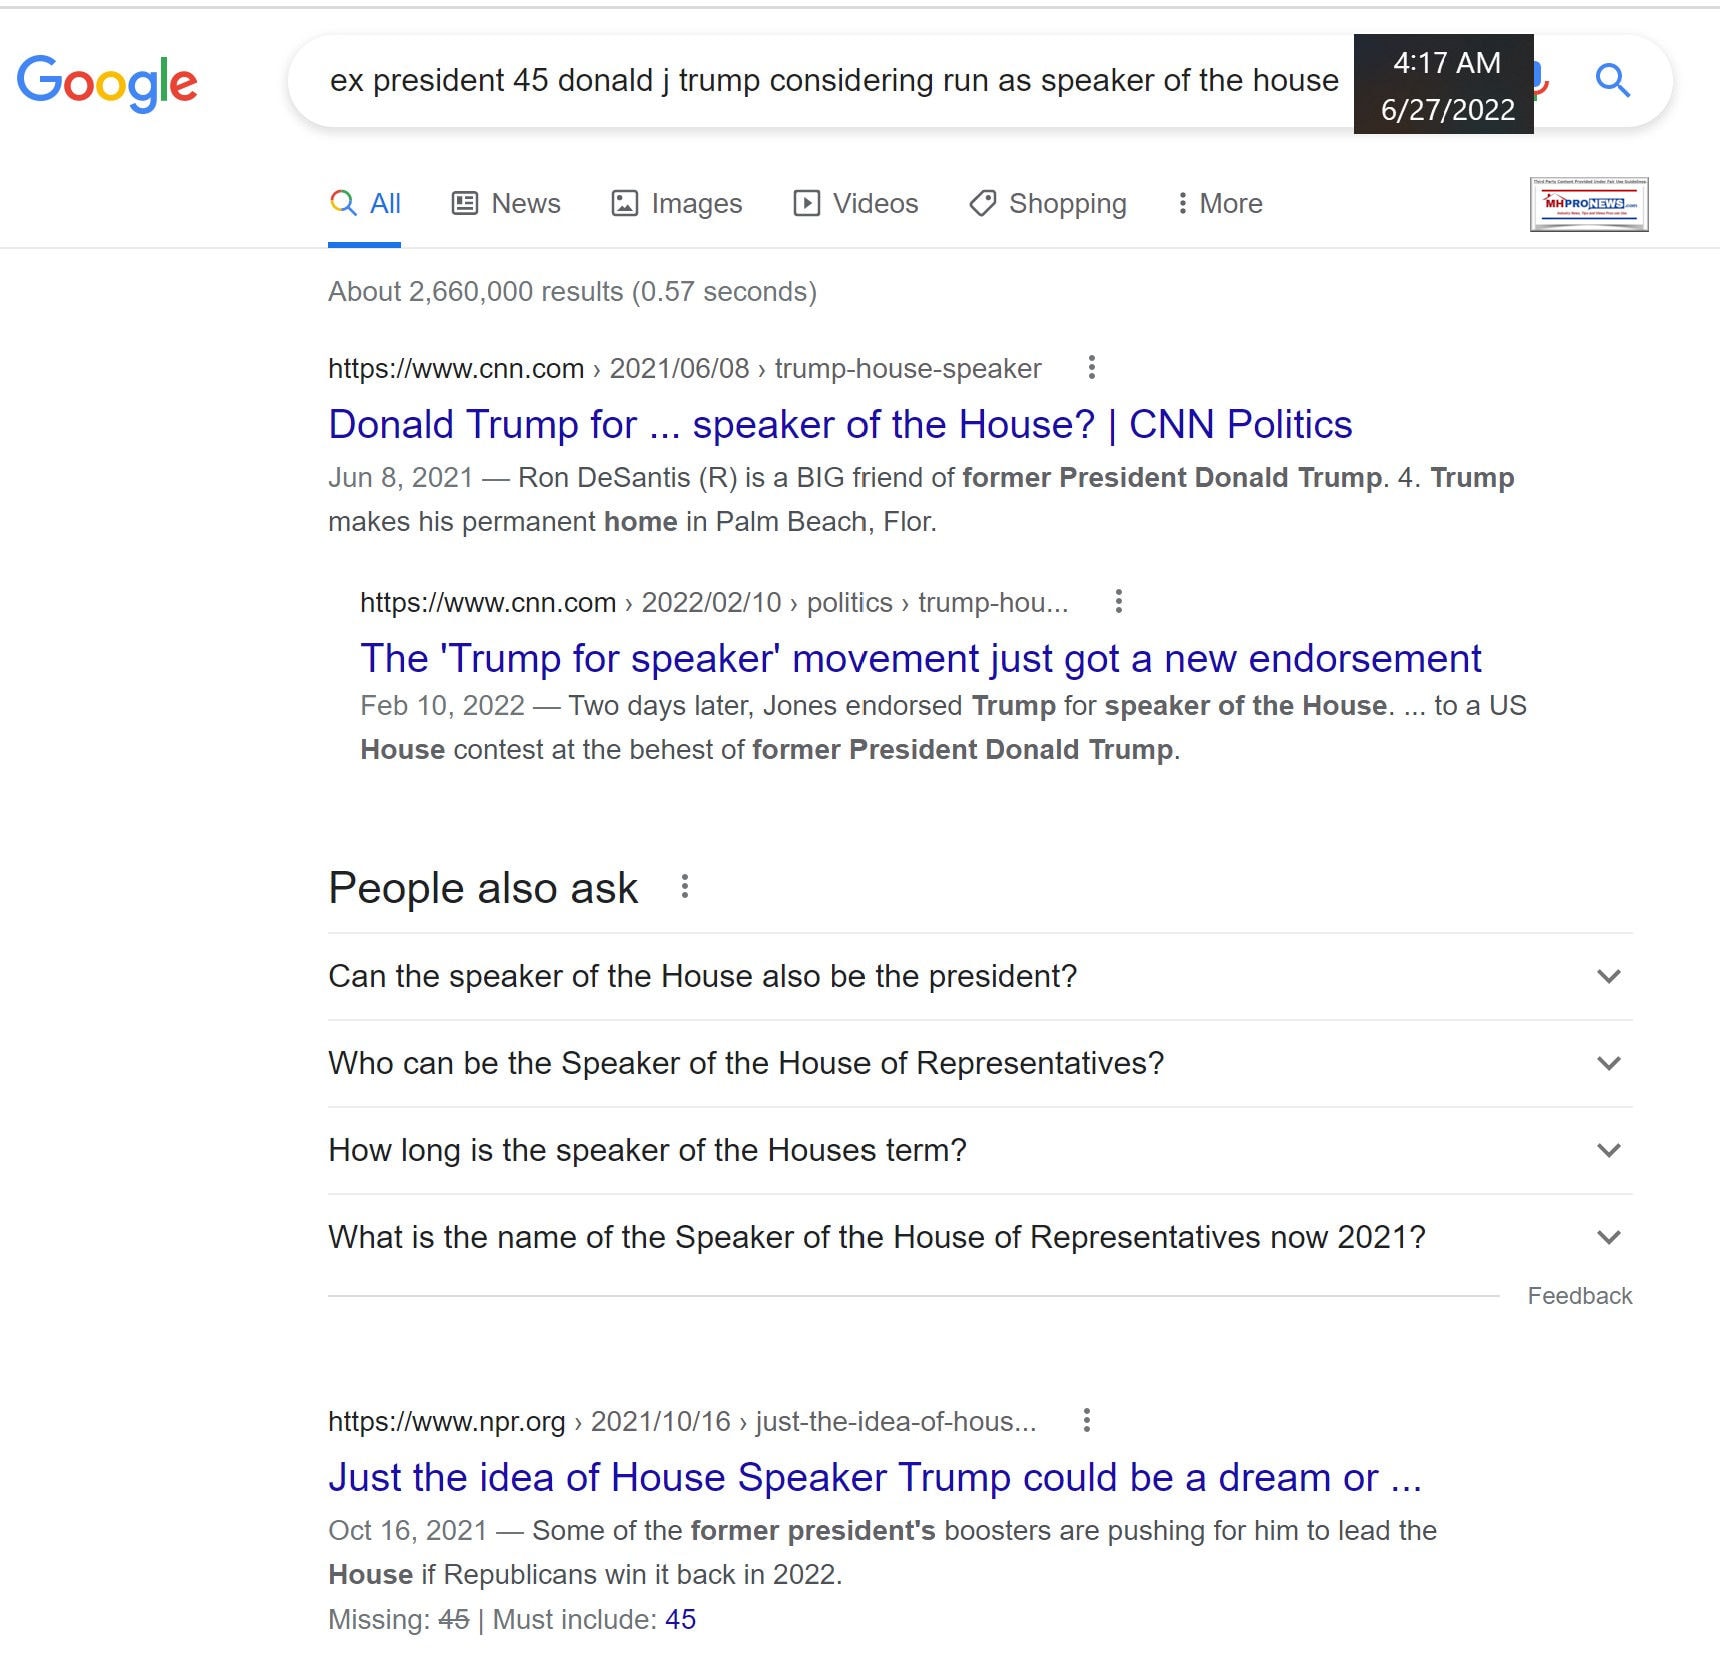 PresidentTrumpConsidersRunSpeakerOfTheHouse6.27.2022-GoogleSearchMHProNews